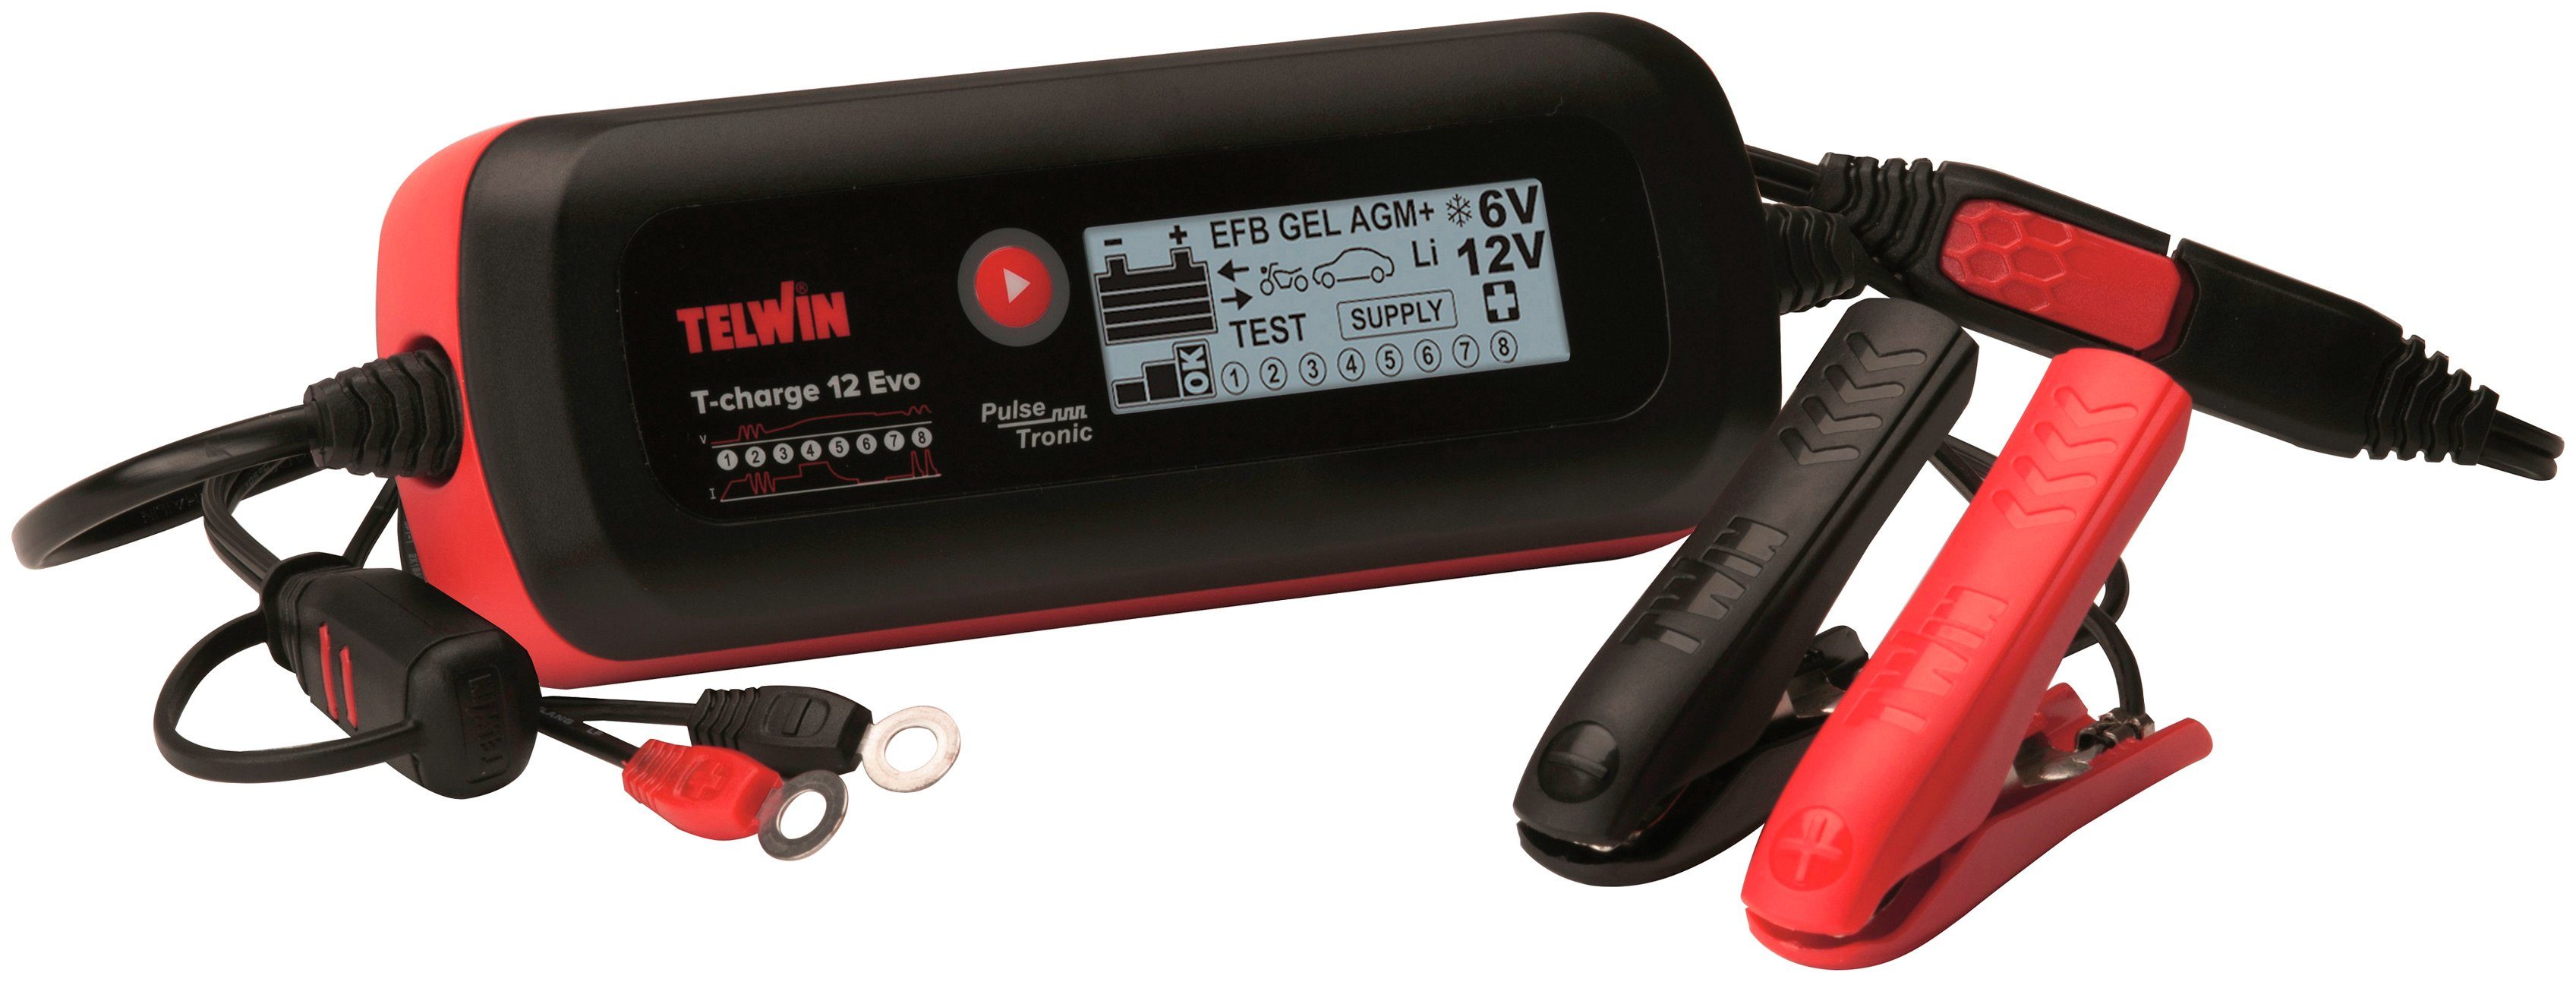 TELWIN T-Charge 12 EVO Autobatterie-Ladegerät (4000 mA, 6/12 V)